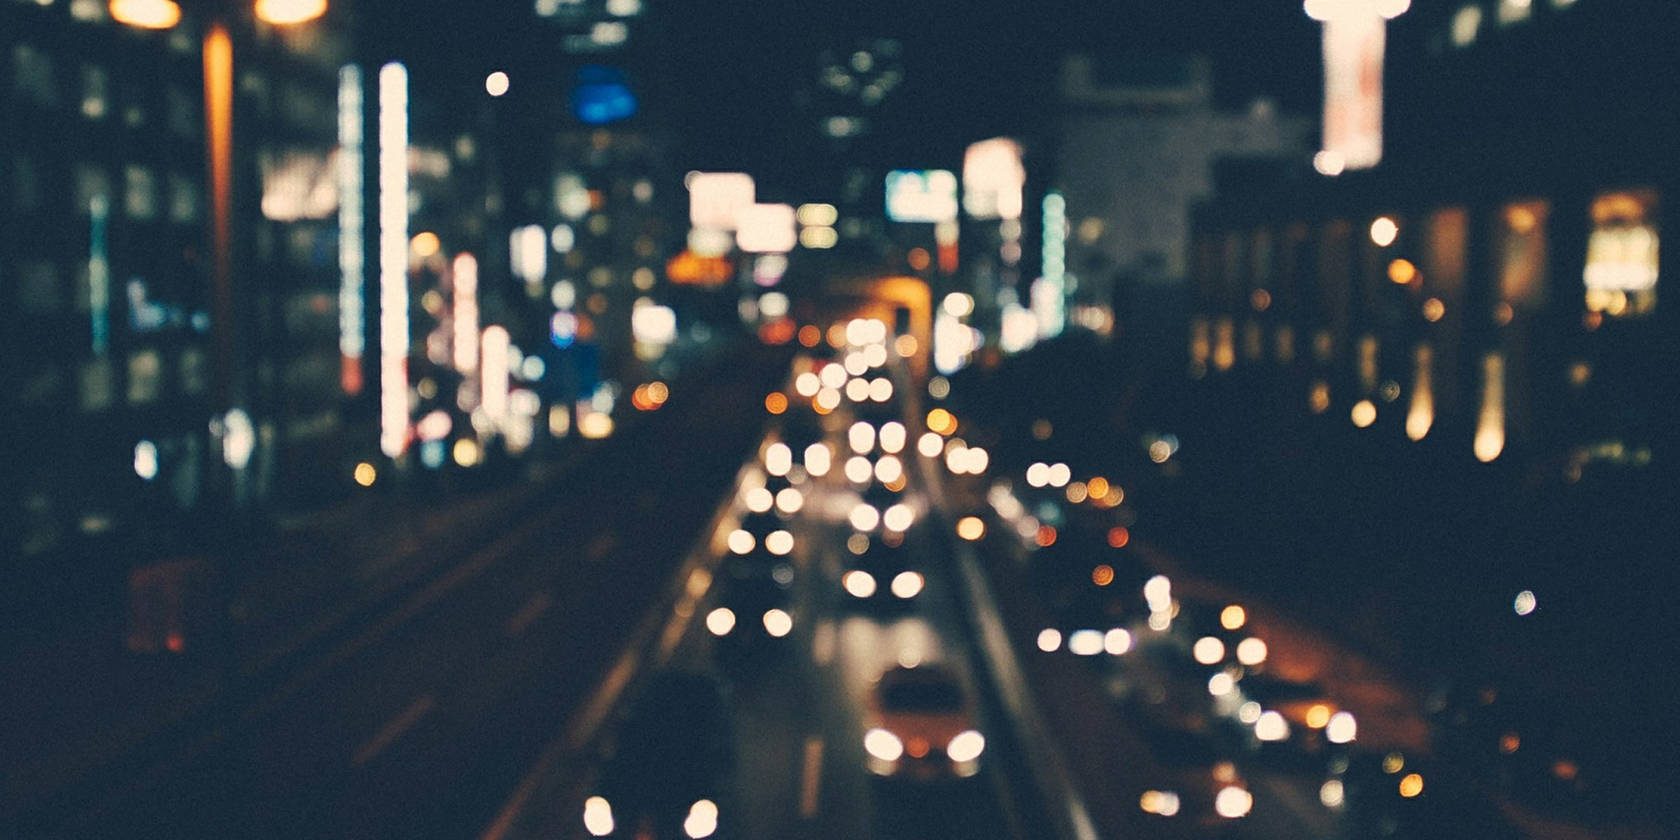 blurry-city-scape-photo.jpg